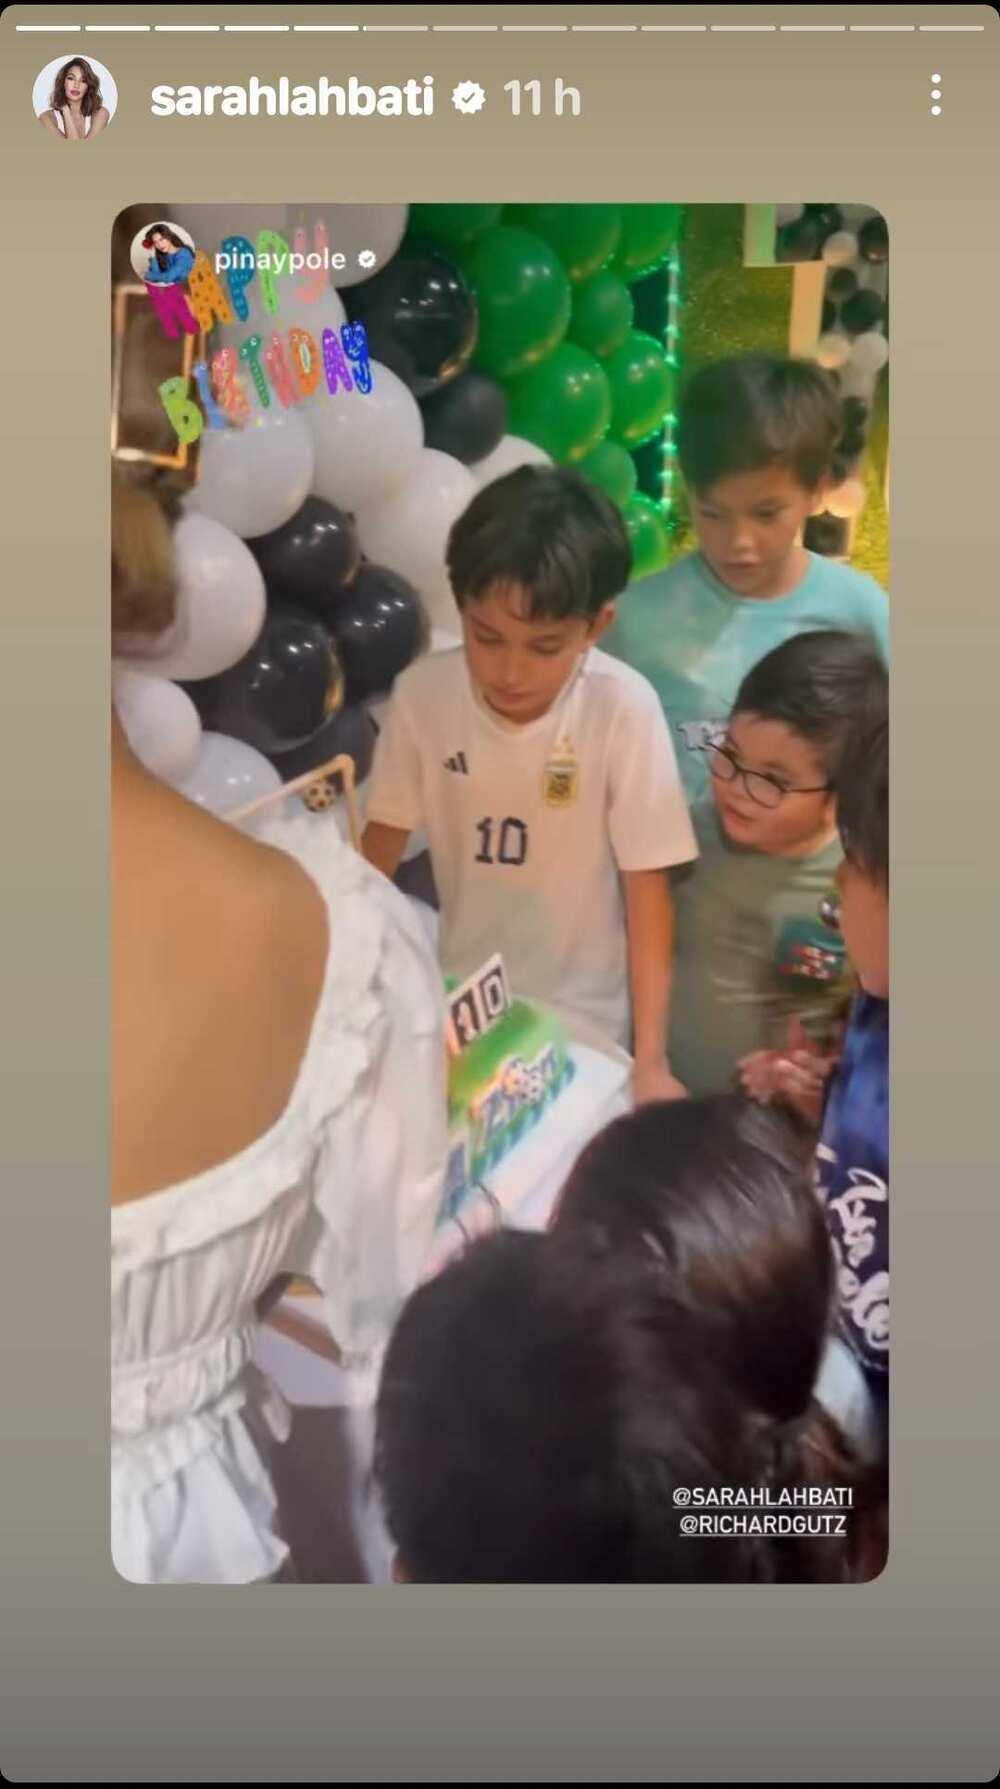 Glimpses of Richard Gutierrez, Sarah Lahbati’s son Zion’s birthday party go viral